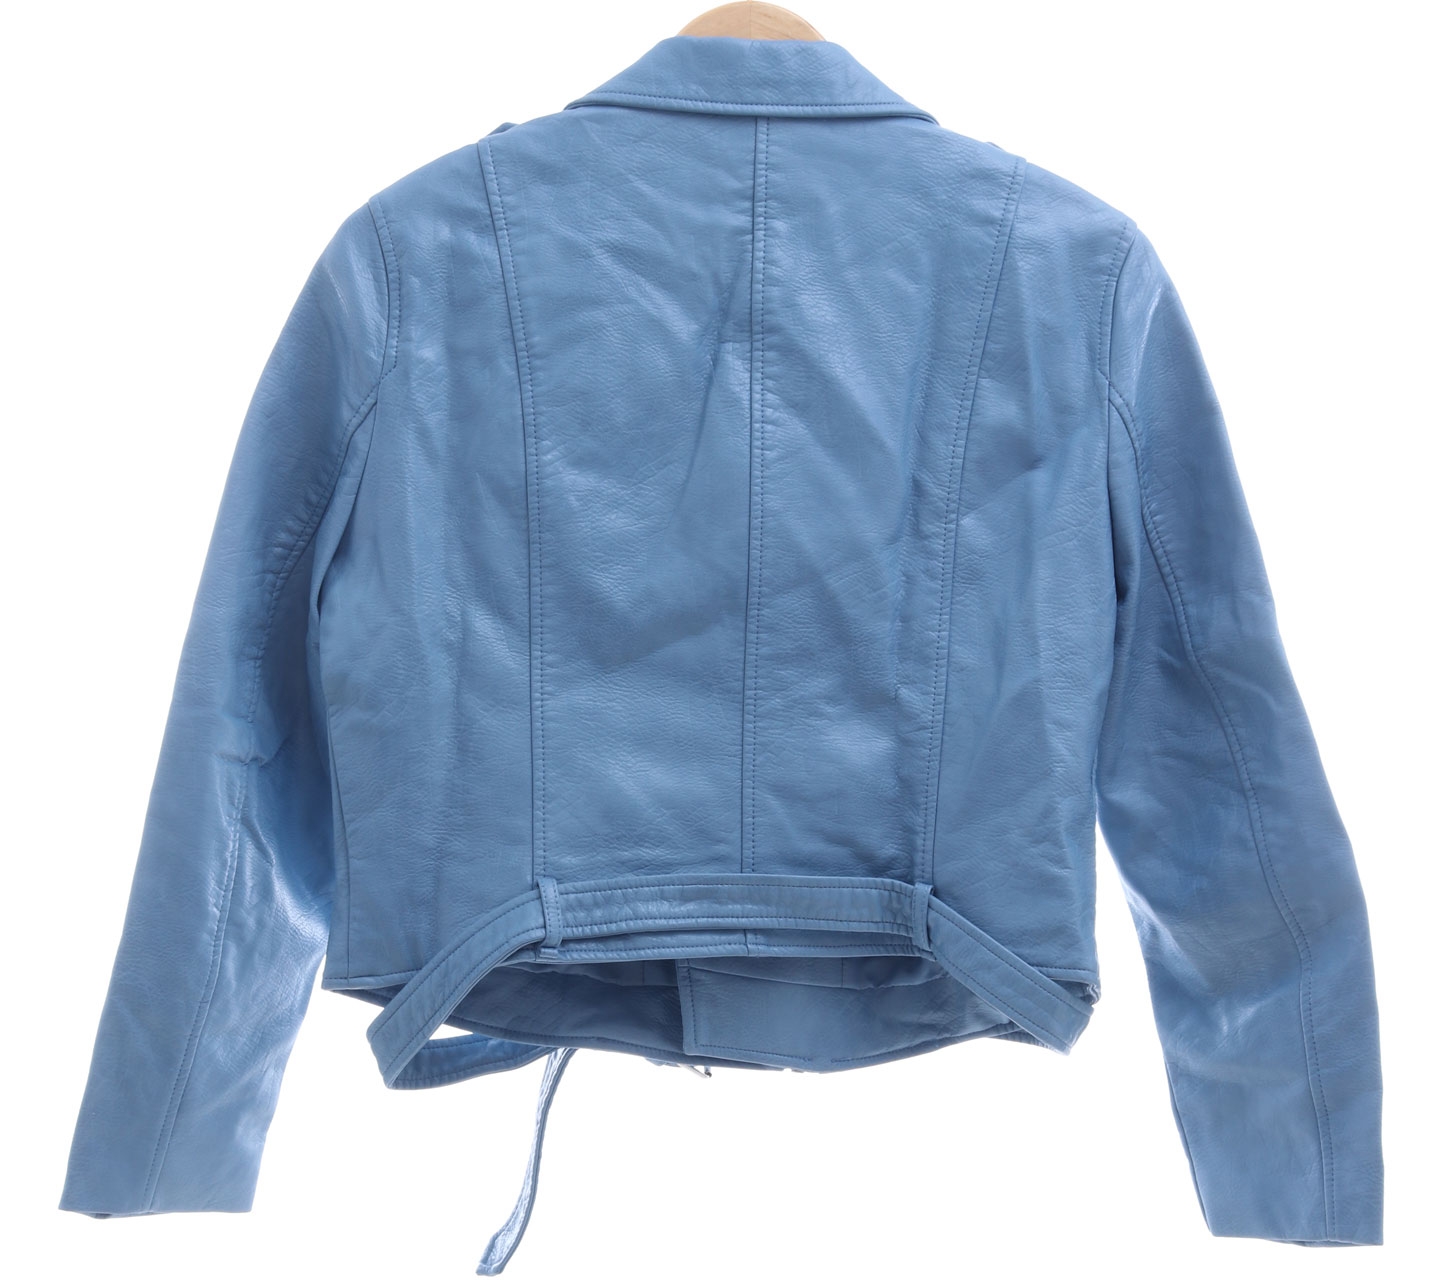 Zara Light Blue Jacket